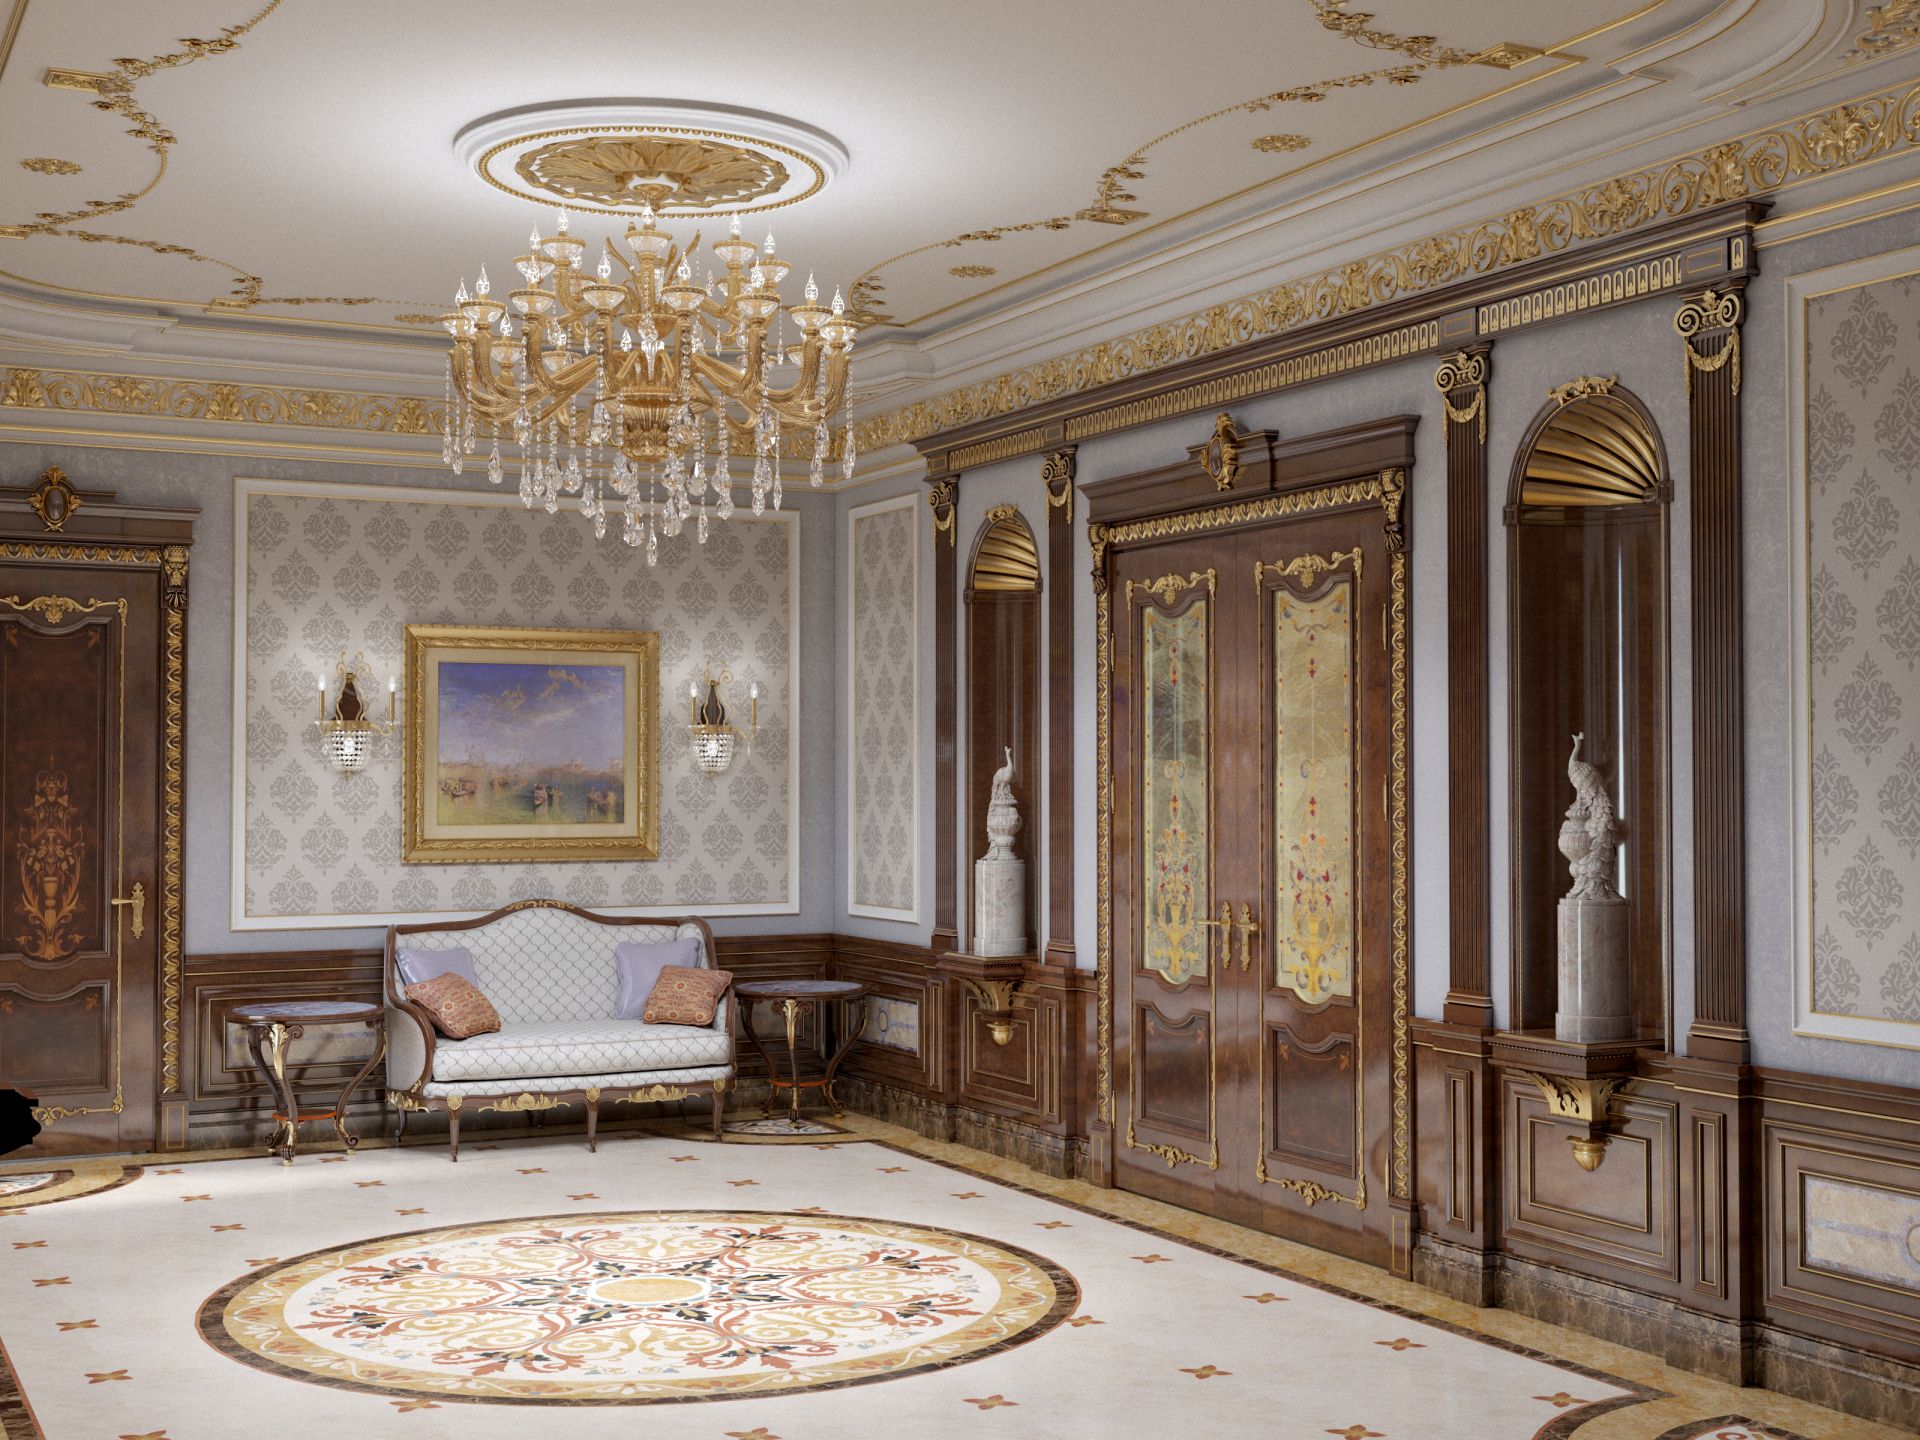 Mansion interior design